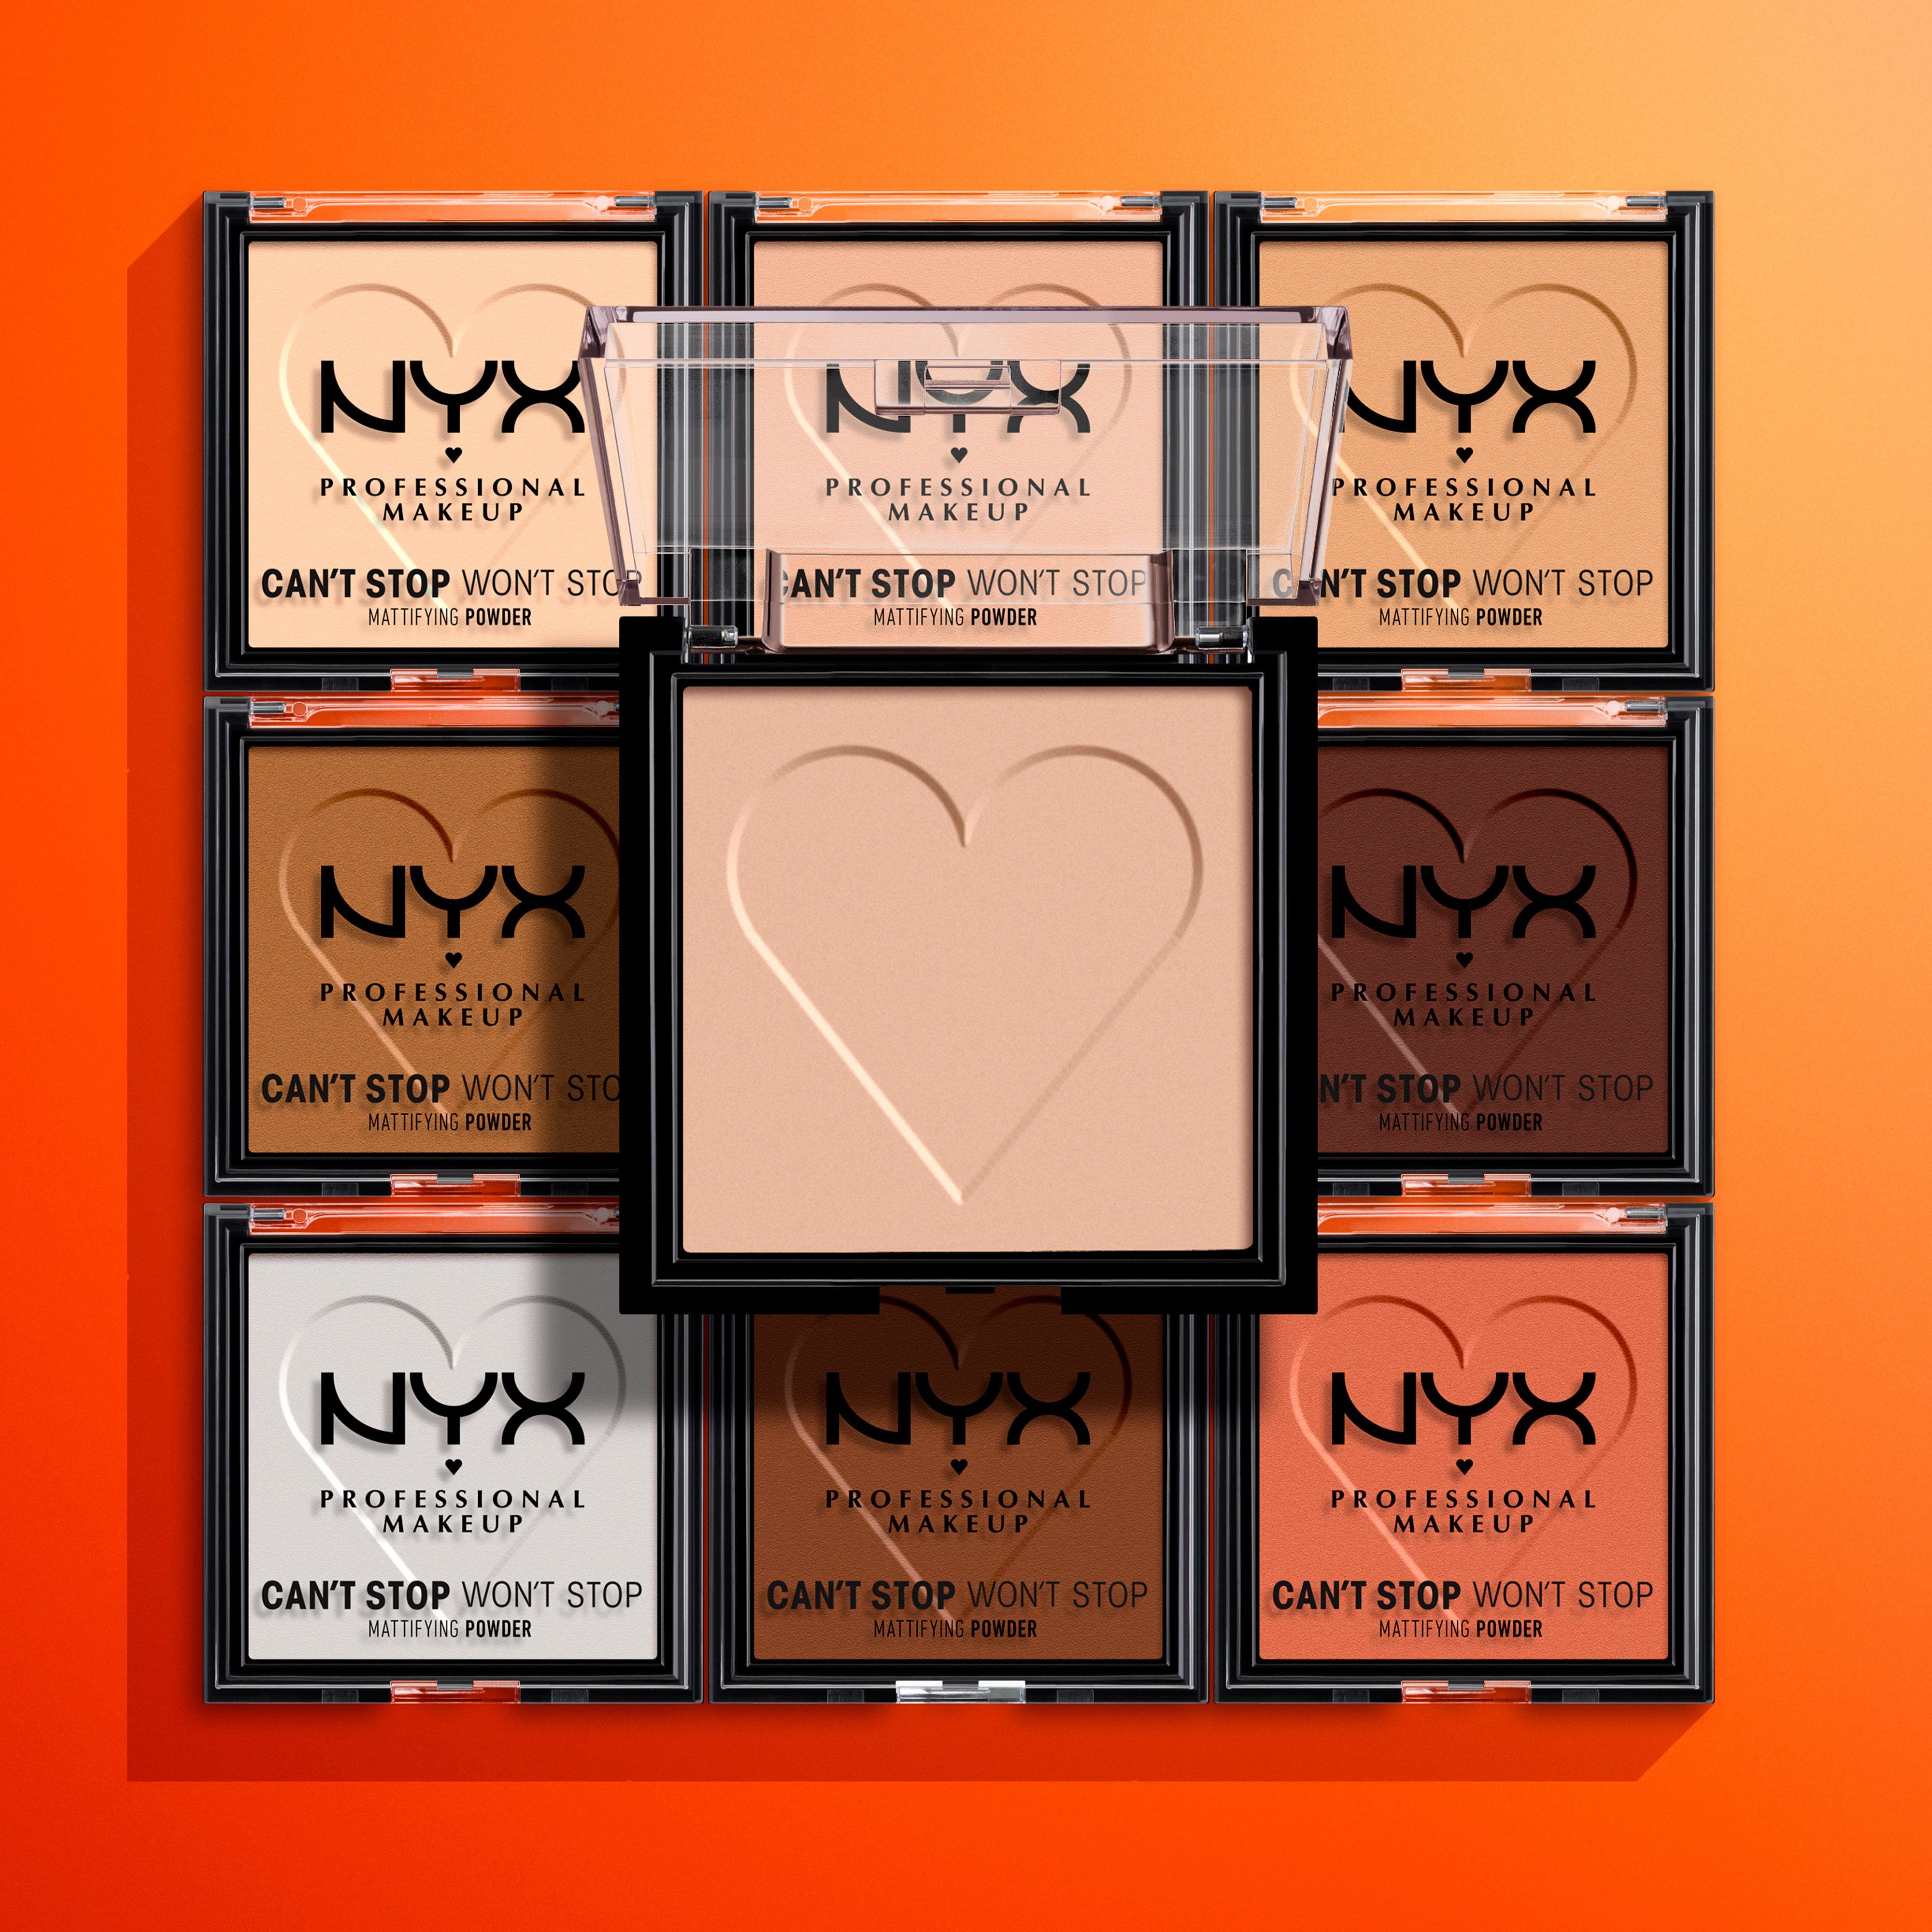 NYX Puder Professional Makeup Powder CSWS 02 Mattifying Light